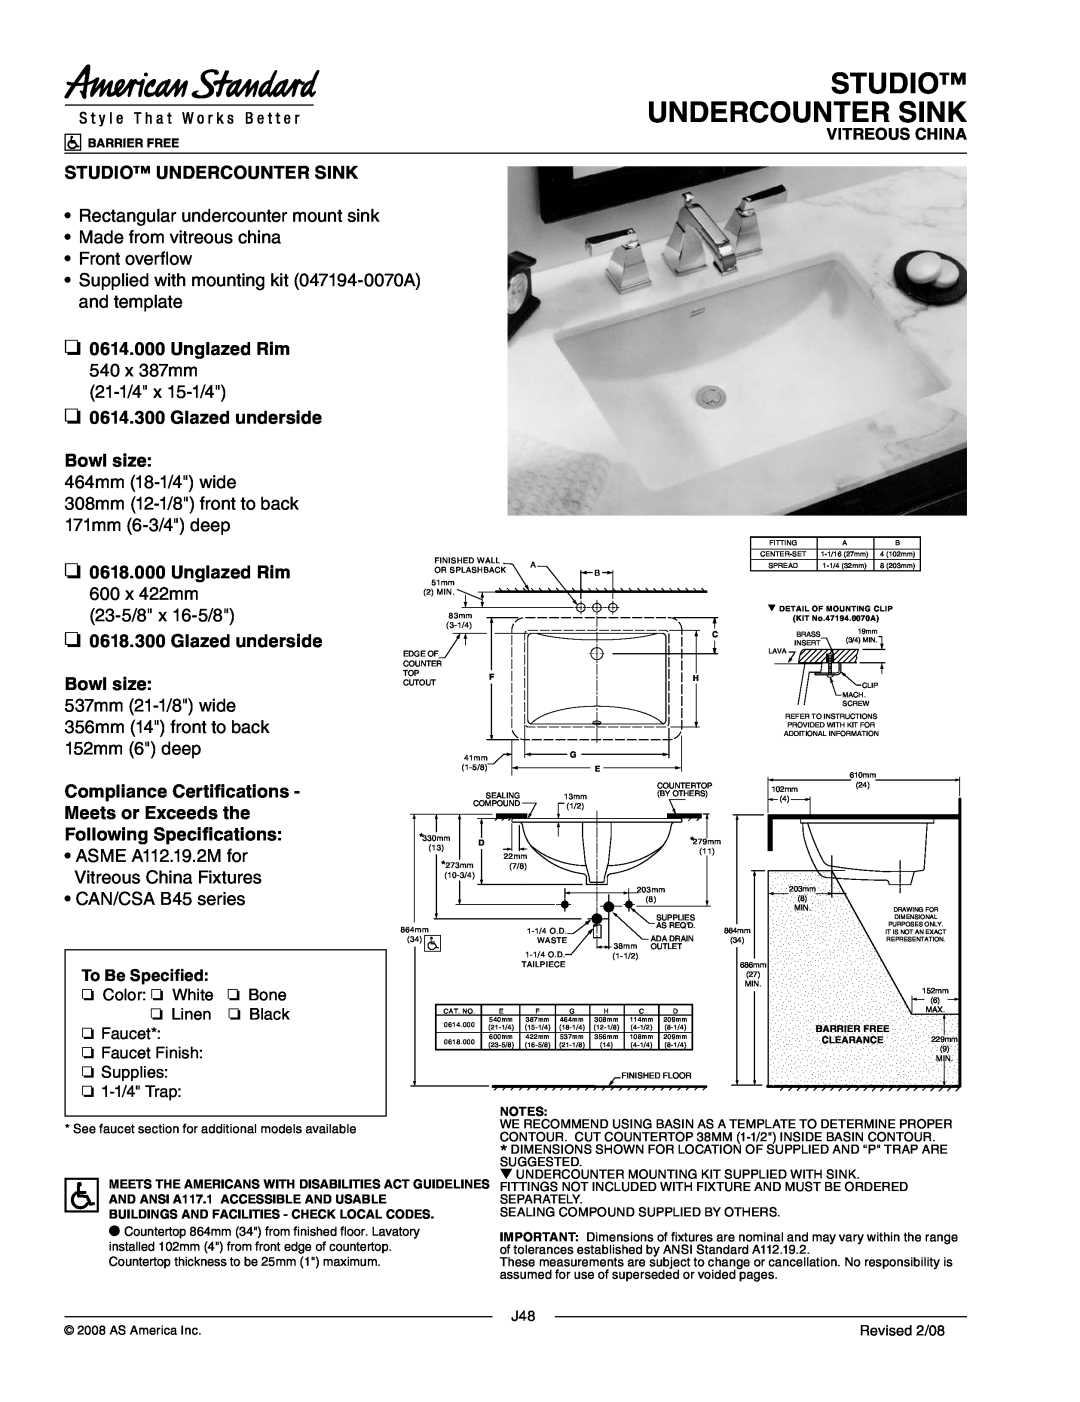 American Standard 0618.000, 0614.000 dimensions Studio Undercounter Sink, Unglazed Rim, Glazed underside Bowl size 